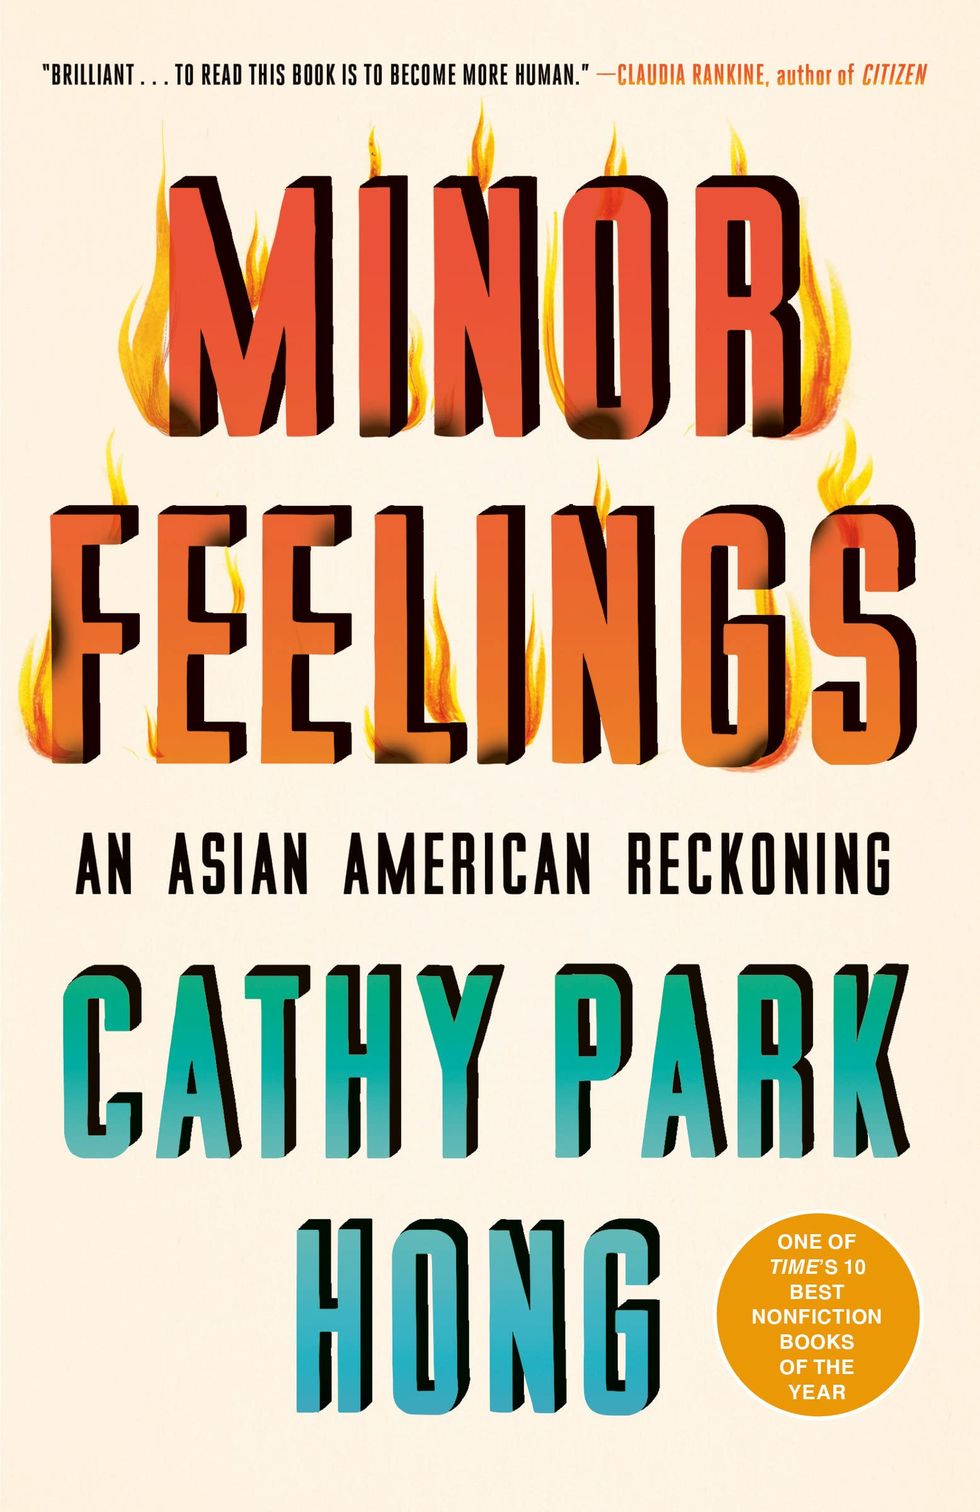 "Minor Feelings: An Asian American Reckoning" (2020)